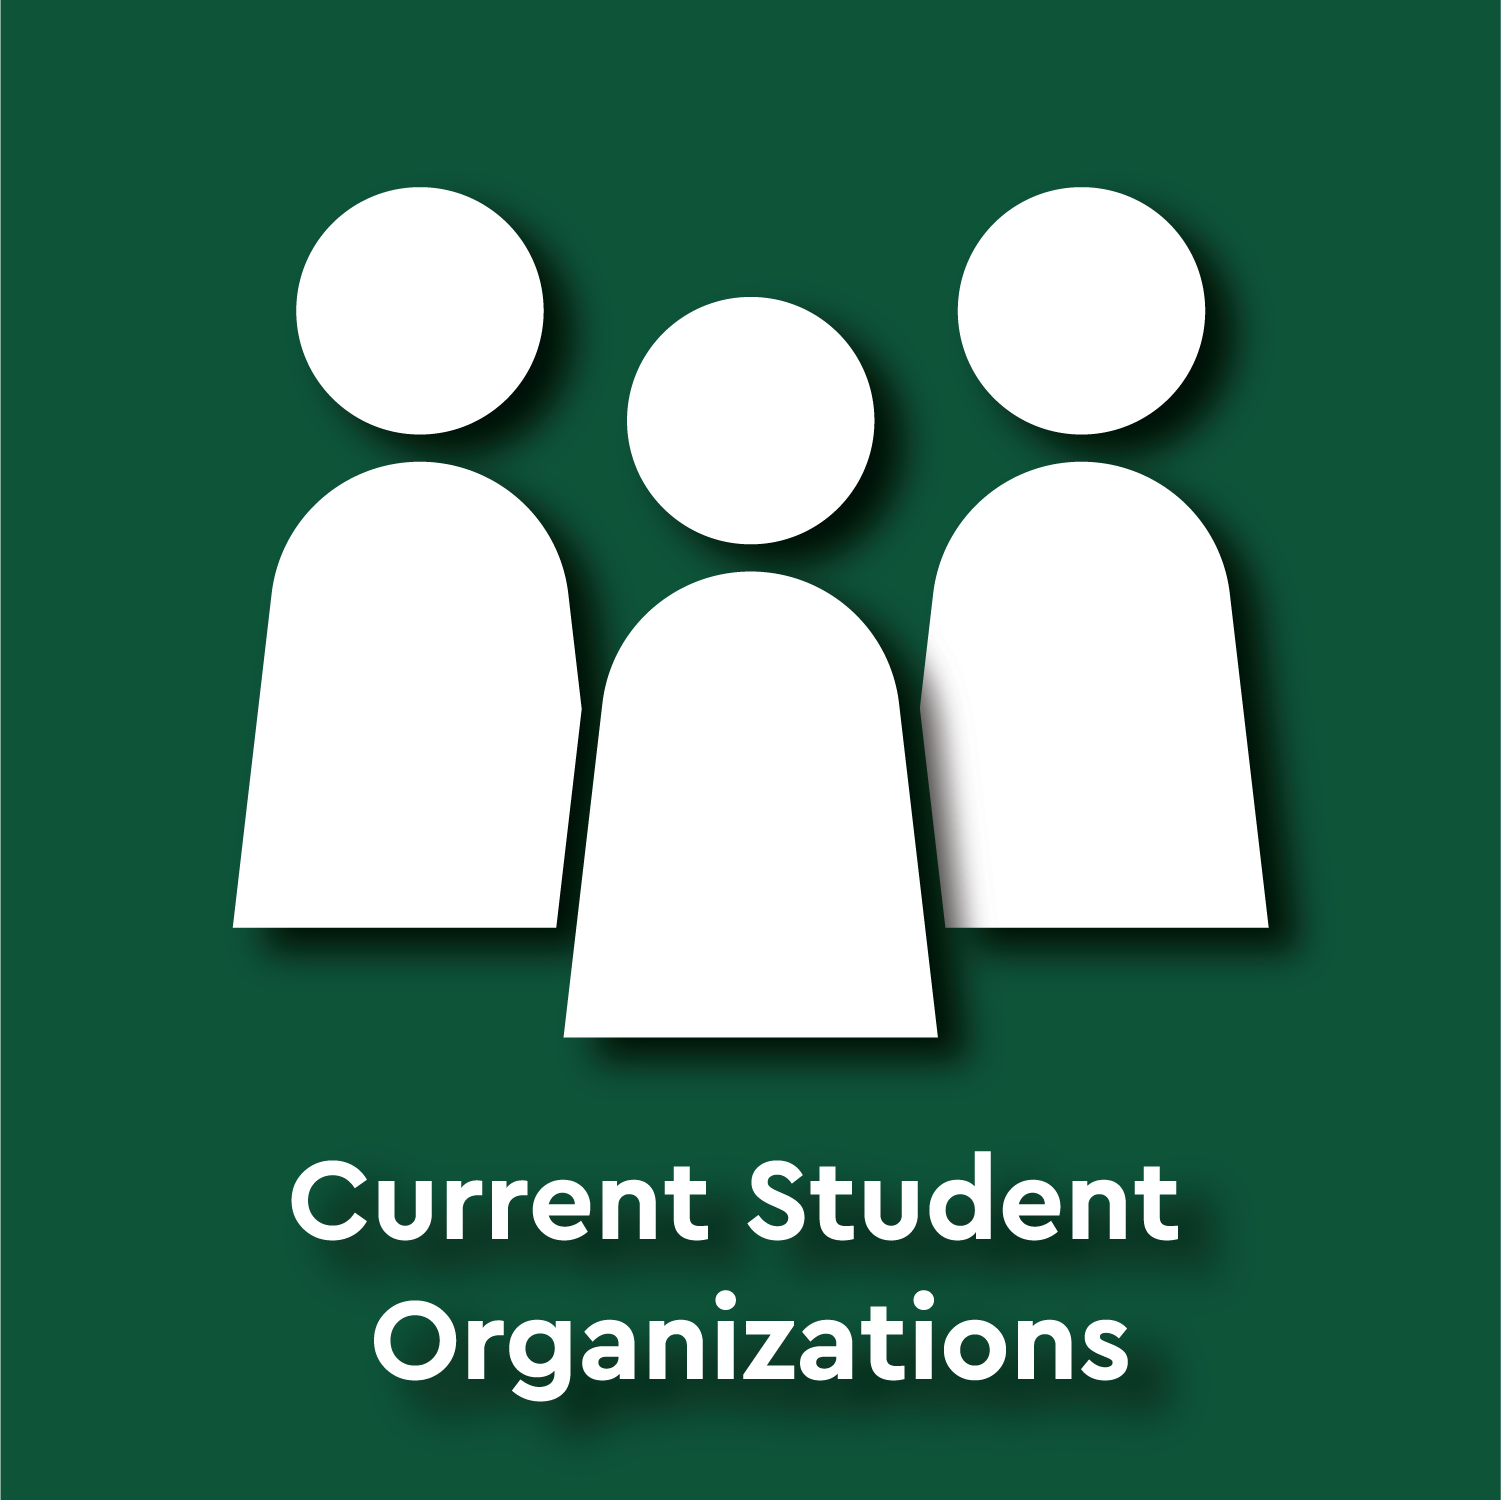 Current Student Organizations